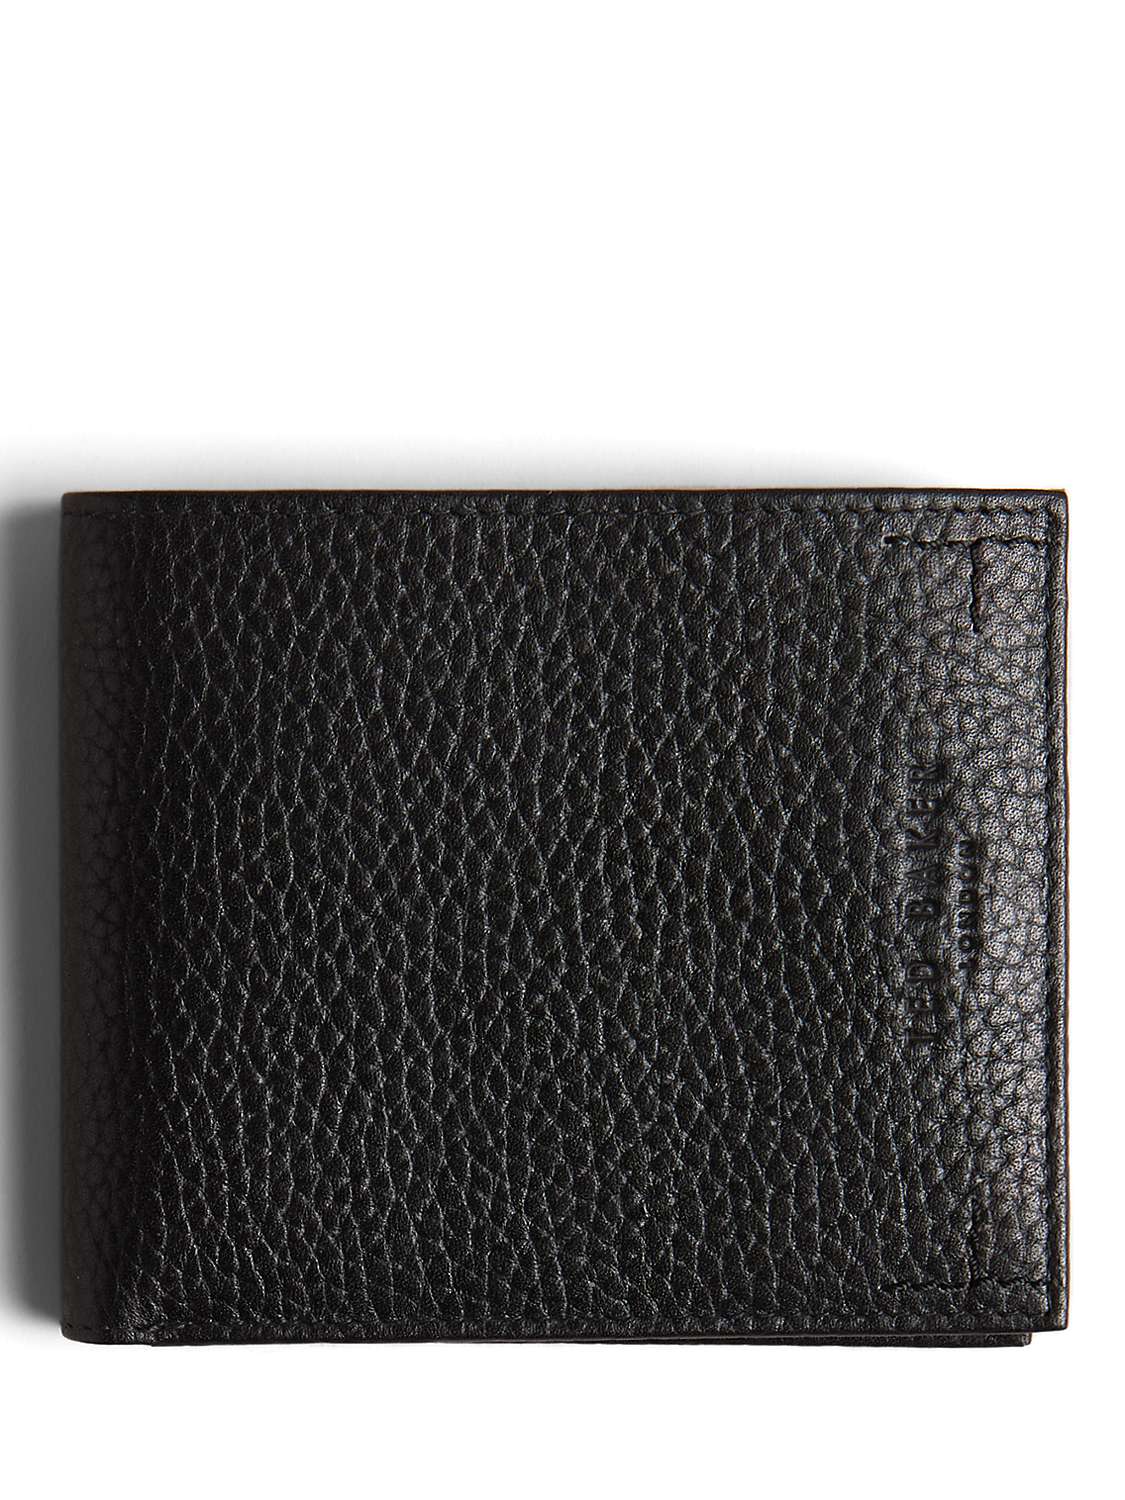 Ted Baker Leather Bifold Wallet, Black at John Lewis & Partners